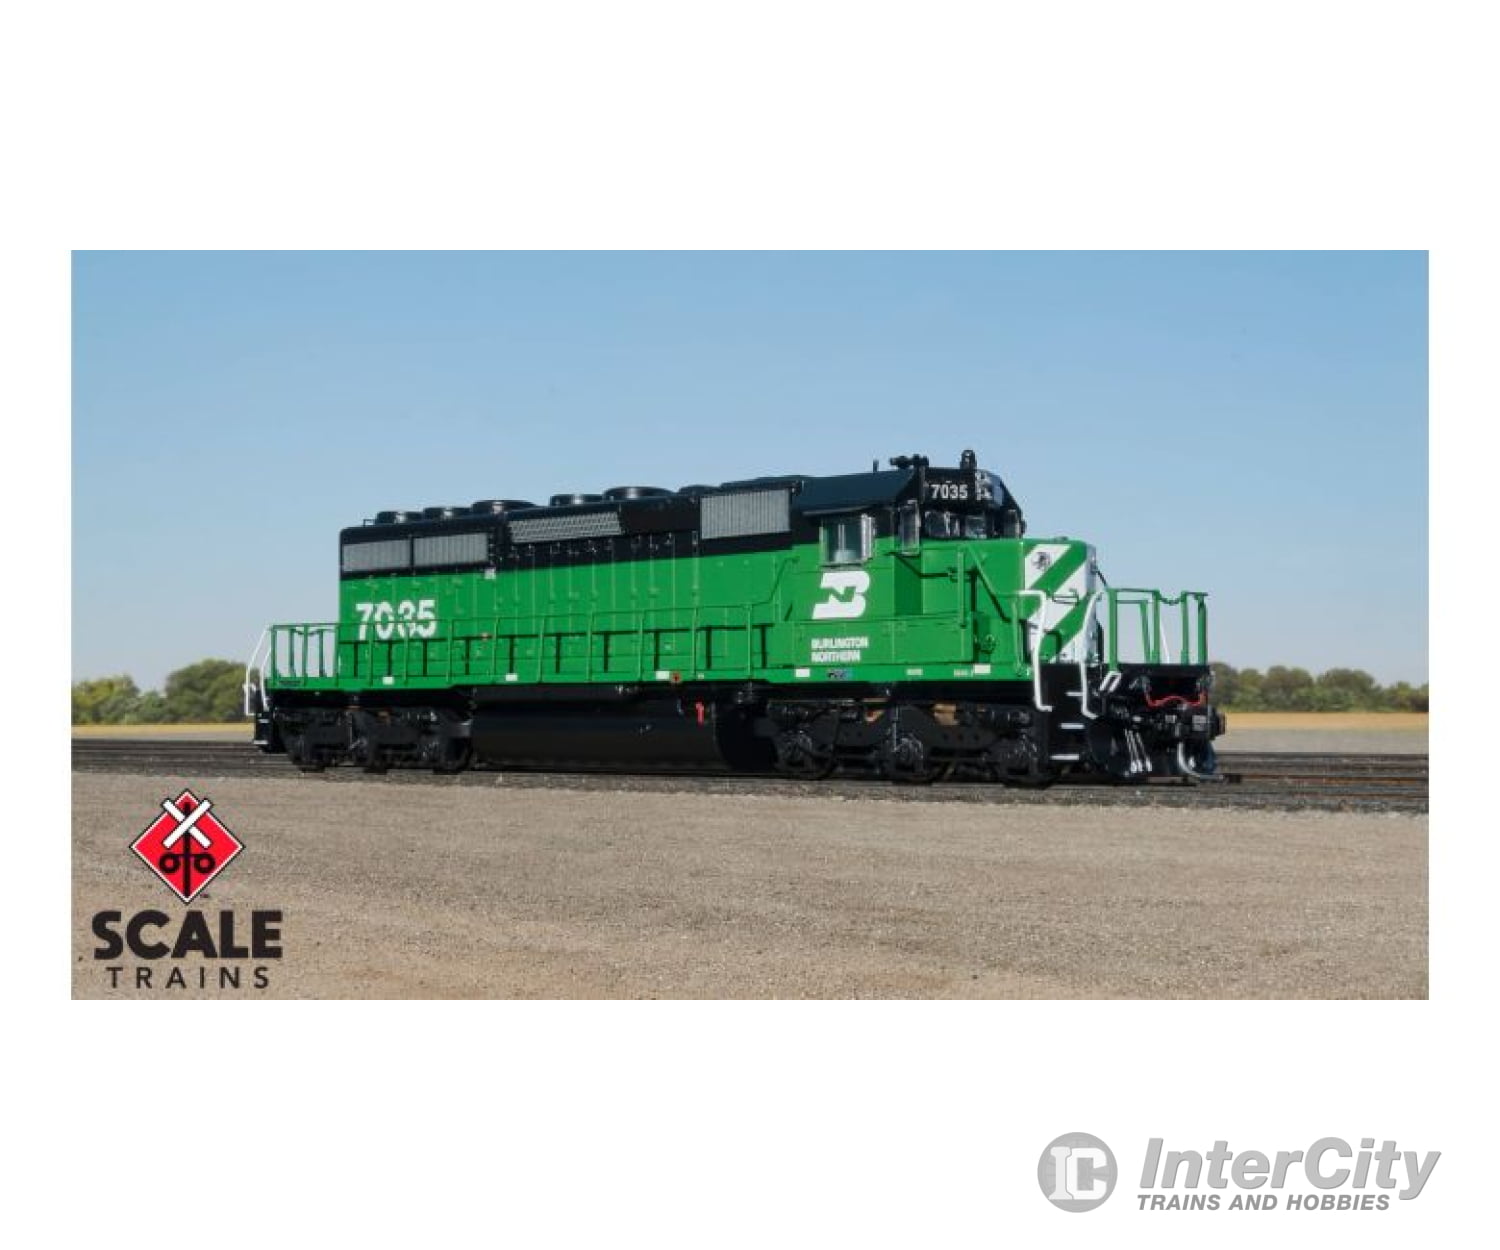 Scale Trains Sxt33785 Rivet Counter N Emd Sd40-2 Bn Burlington Northern #7041 Dcc/Sound Locomotives